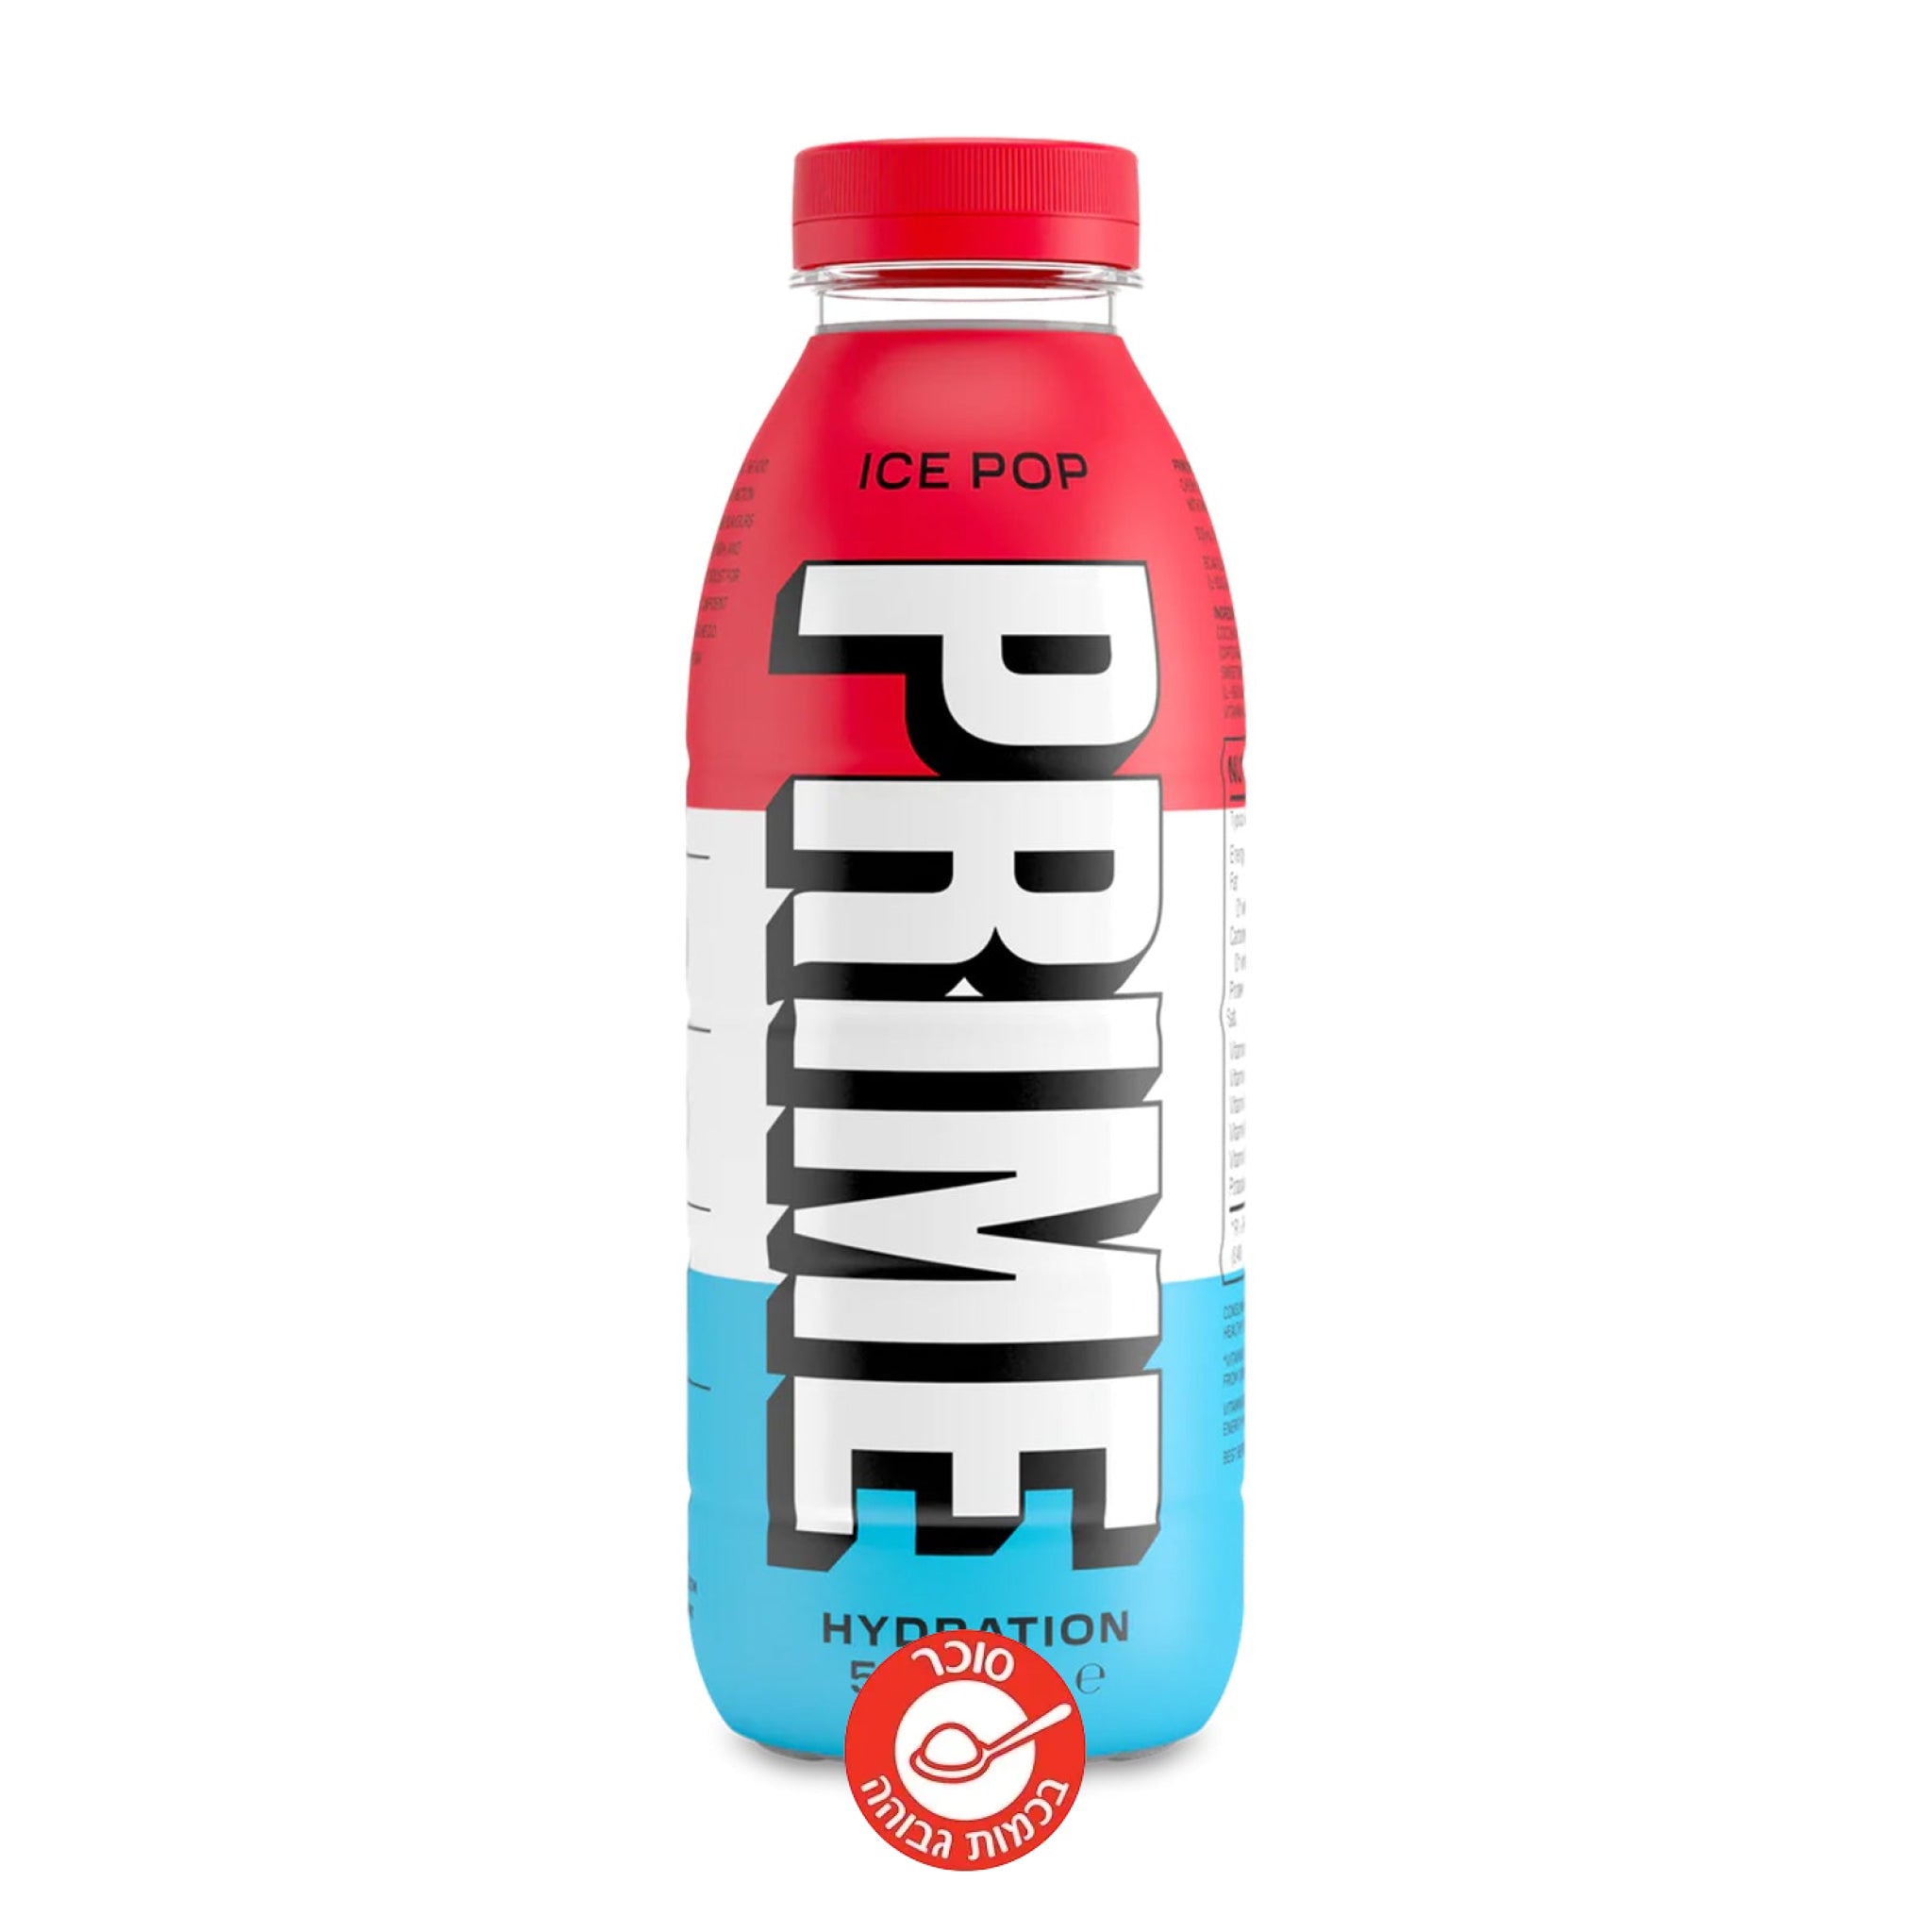 Prime Hydration Drink - פריים משקה איזוטוני